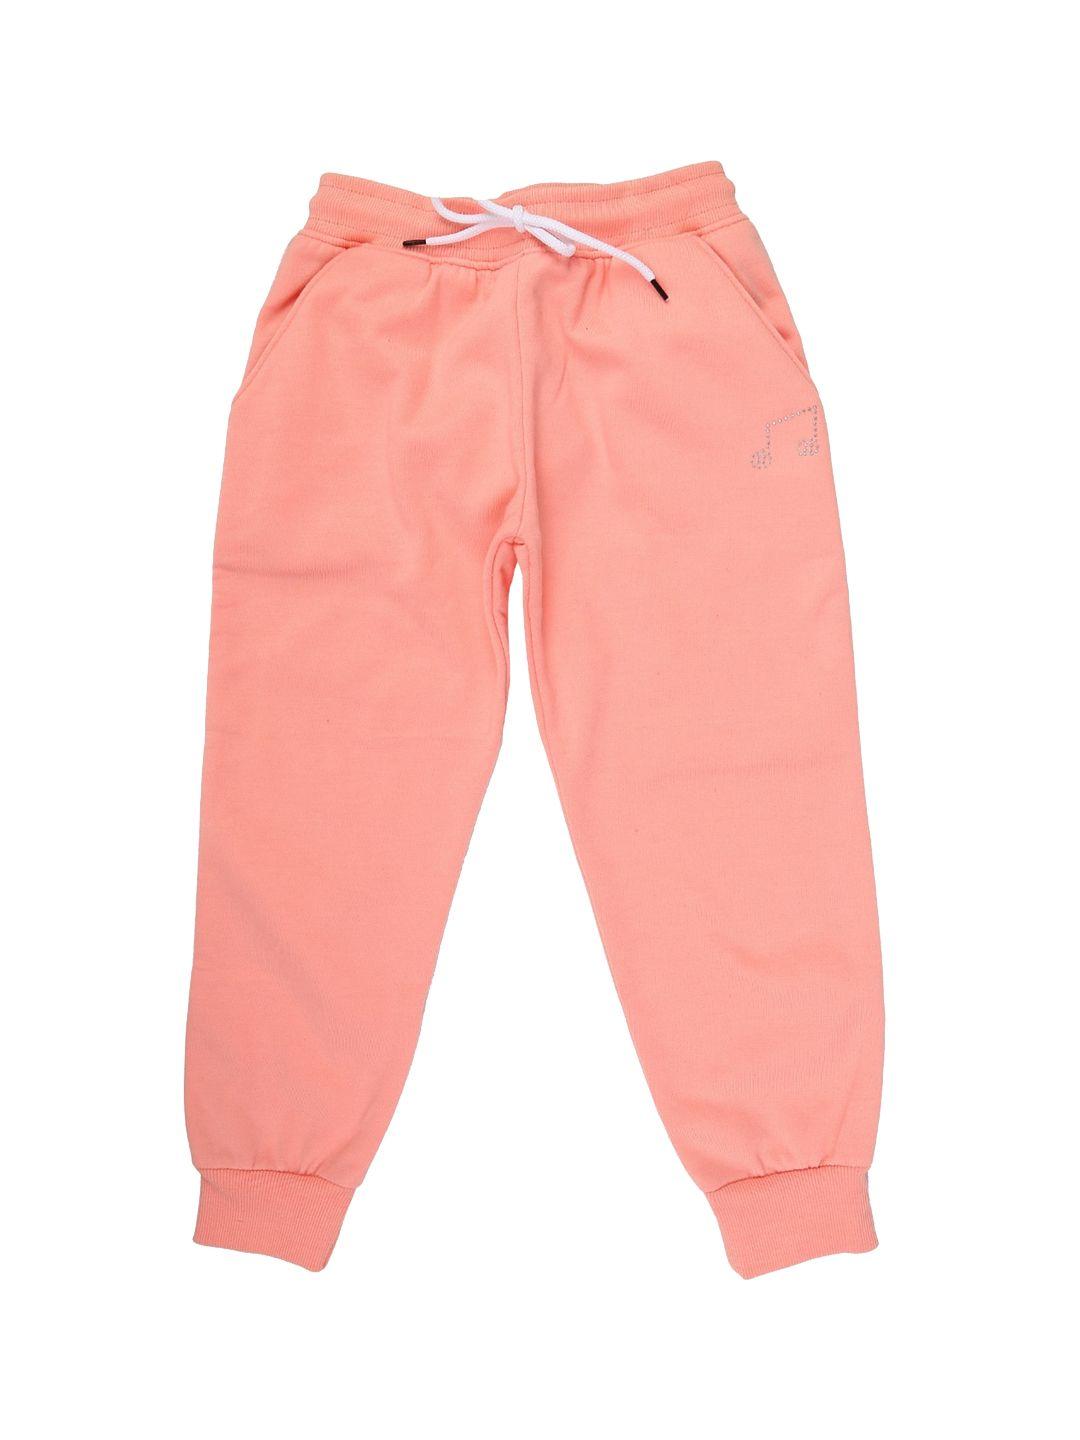 v-mart boys peach easy wash cotton joggers trousers